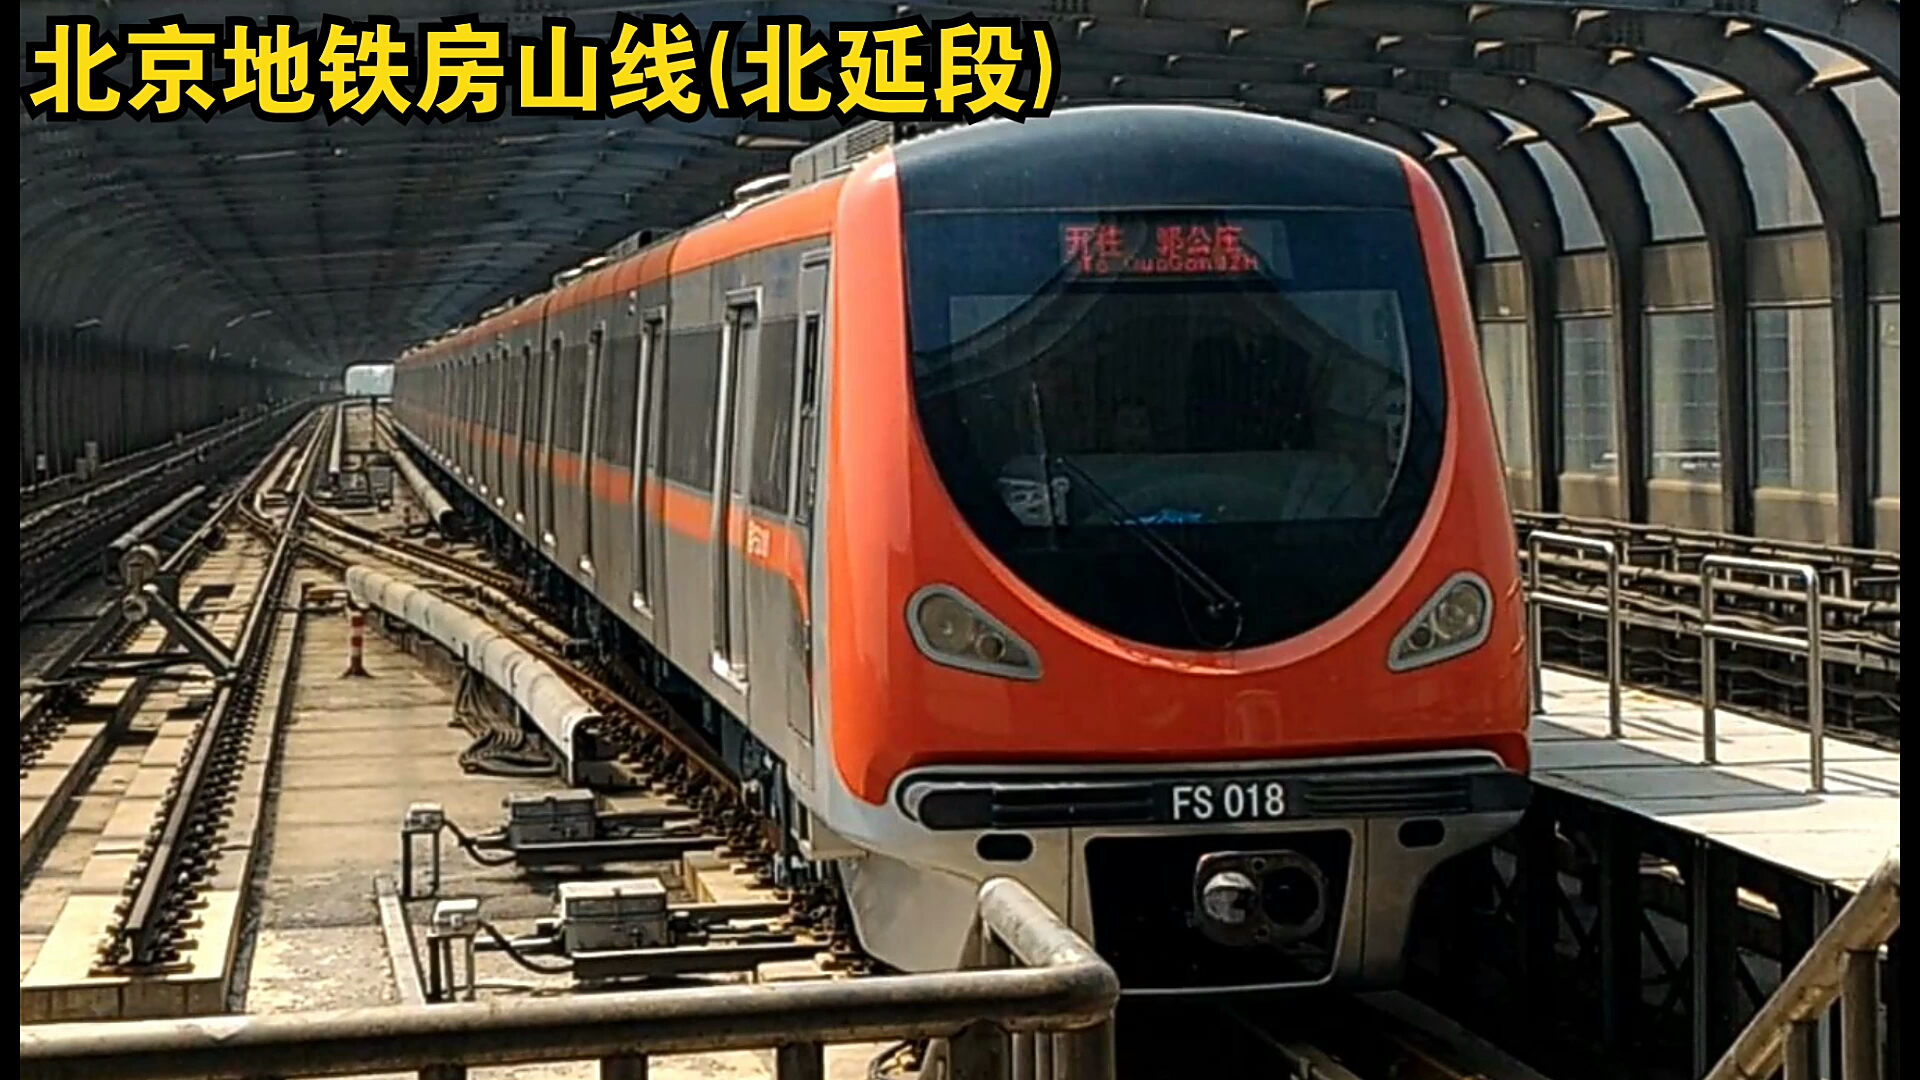 【pov*31】北京地铁房山线北延段(郭公庄